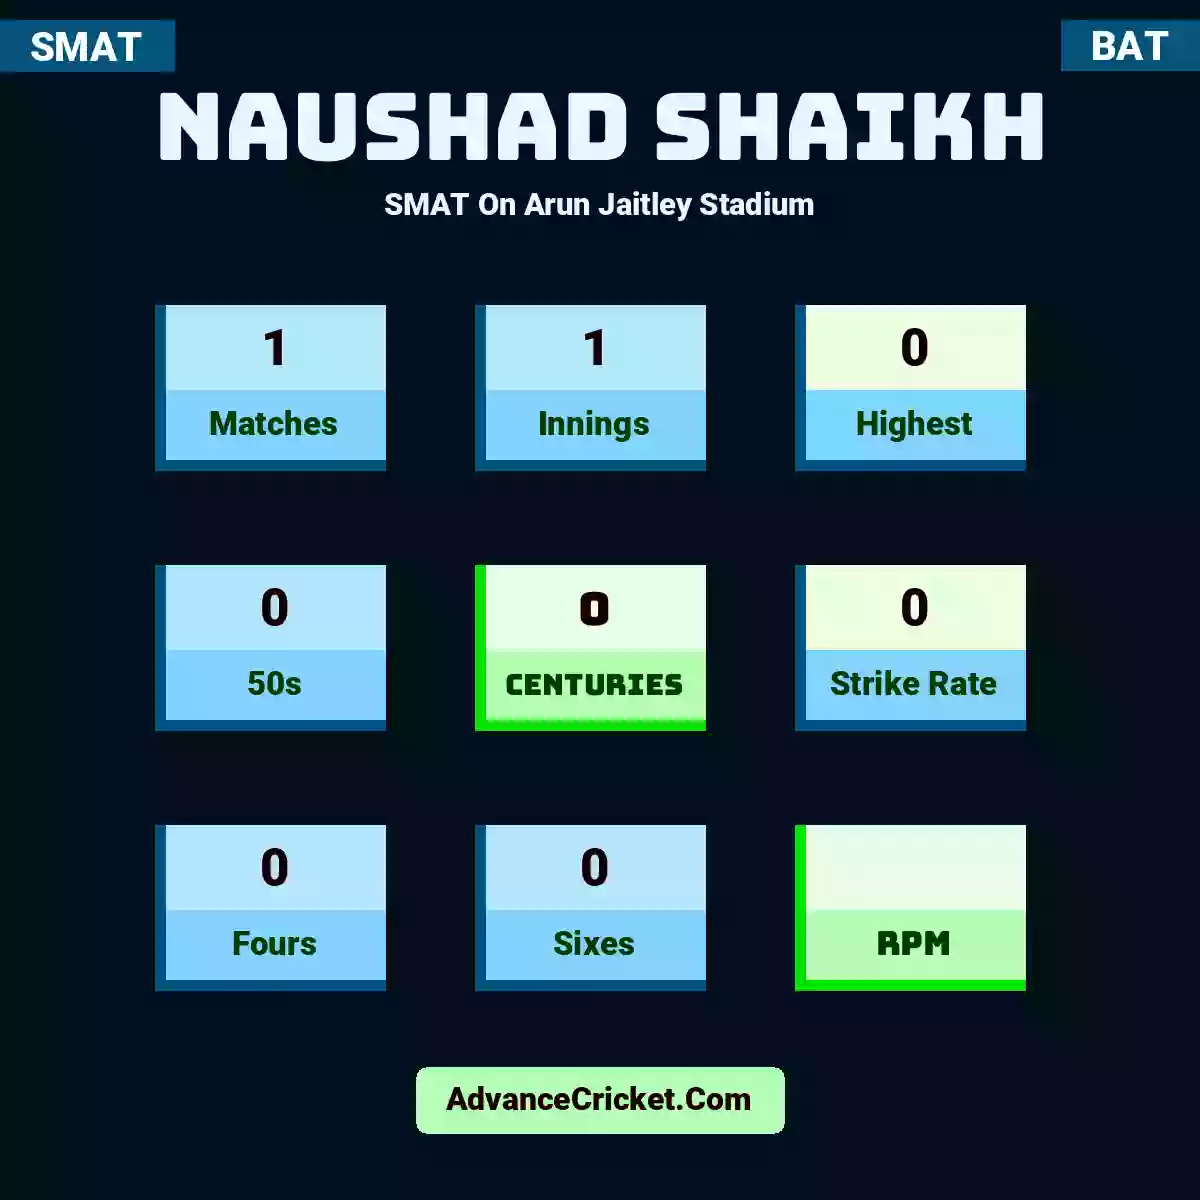 Naushad Shaikh SMAT  On Arun Jaitley Stadium, Naushad Shaikh played 1 matches, scored 0 runs as highest, 0 half-centuries, and 0 centuries, with a strike rate of 0. N.Shaikh hit 0 fours and 0 sixes.